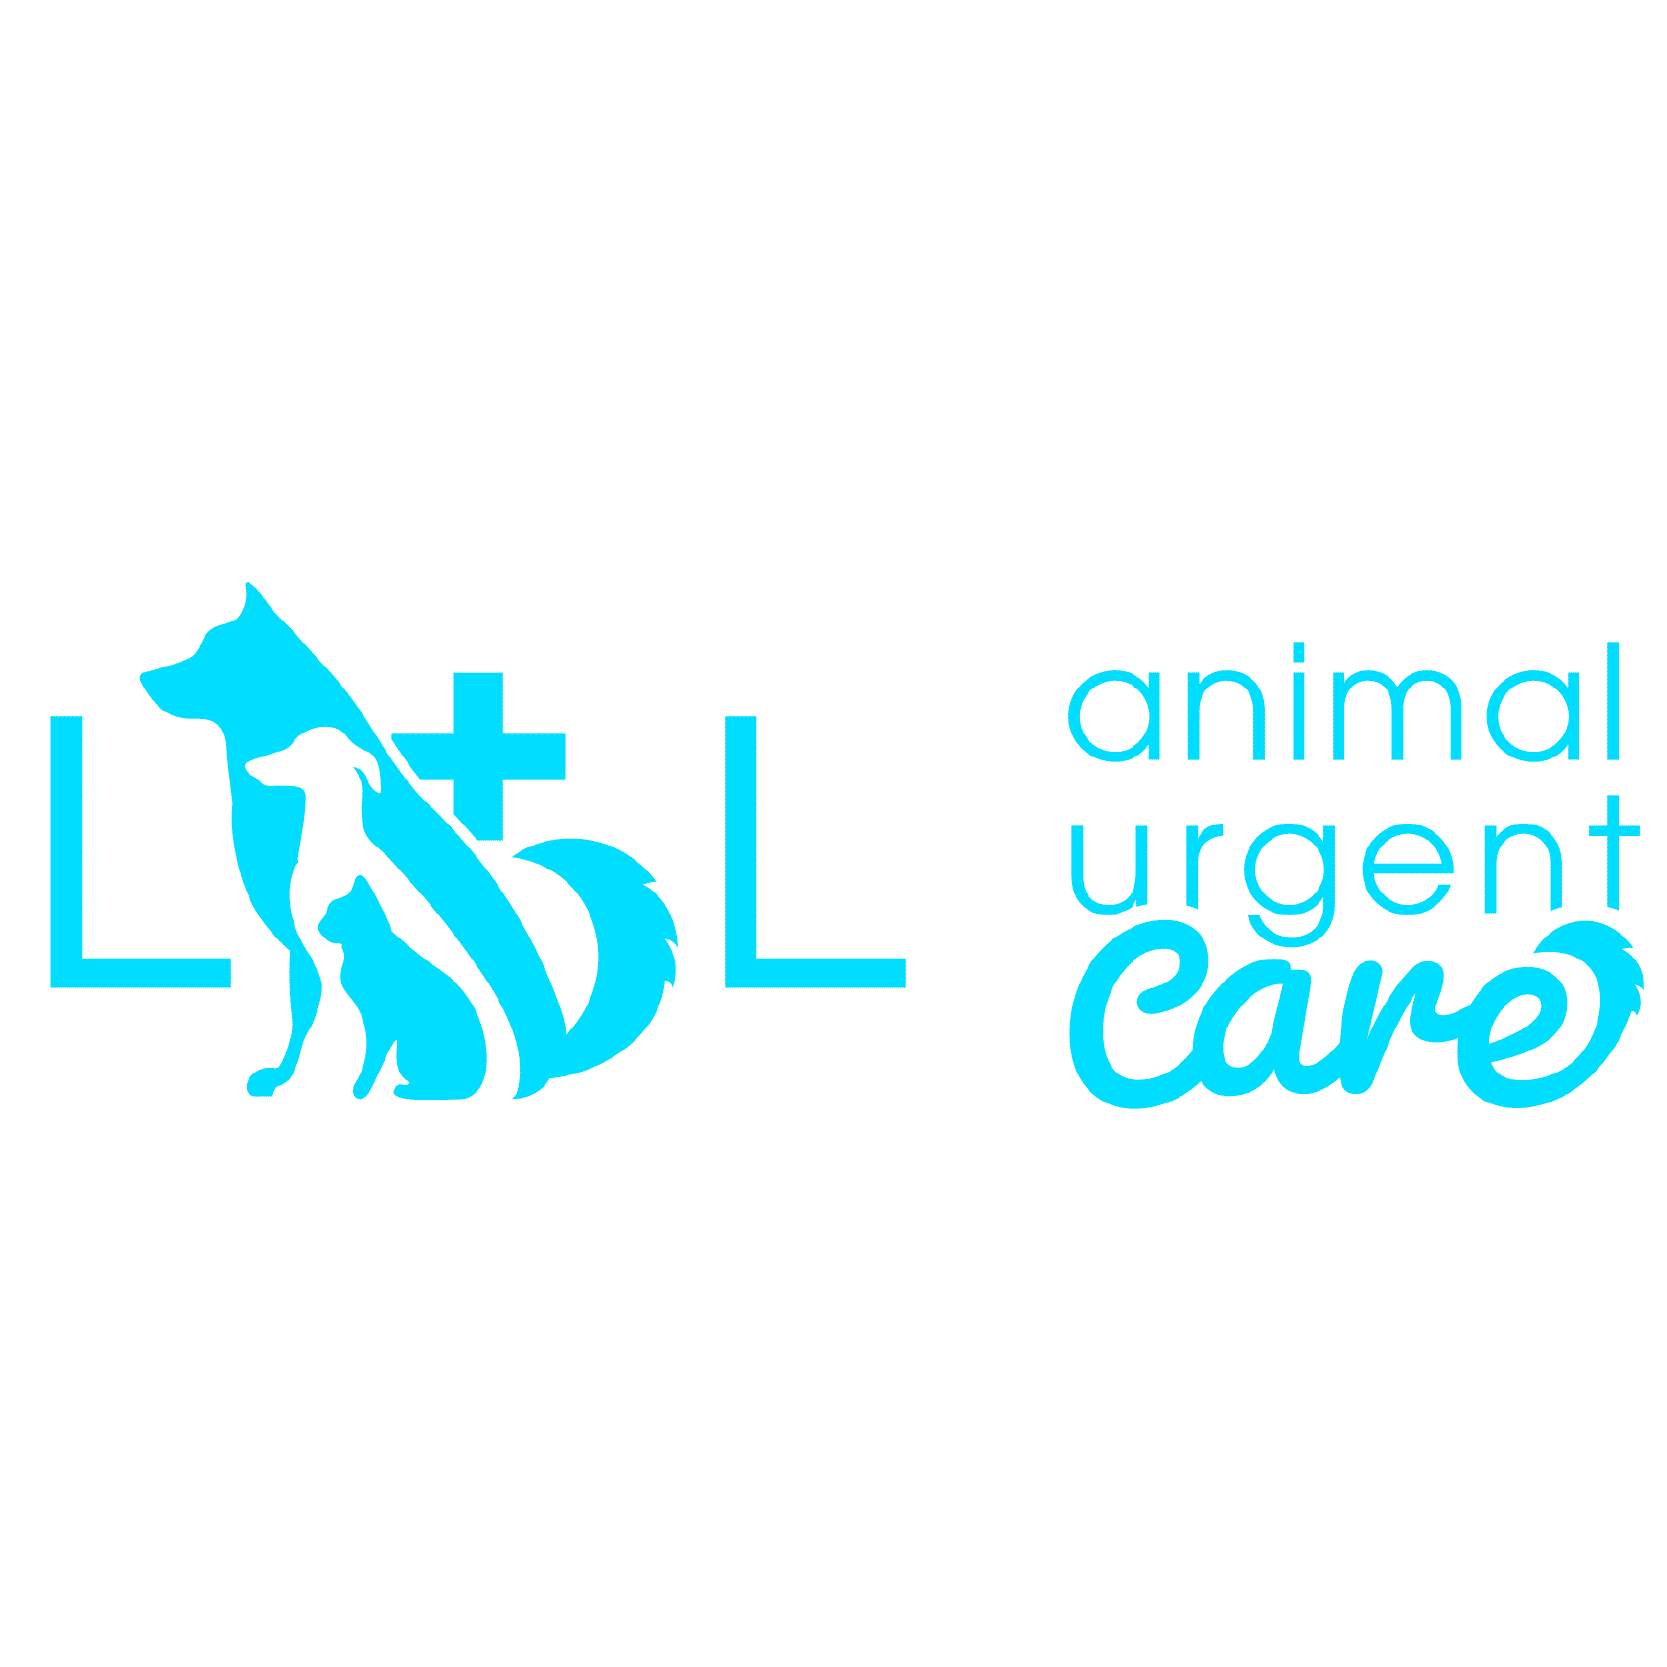 L&L Animal Urgent Care in Kirkland